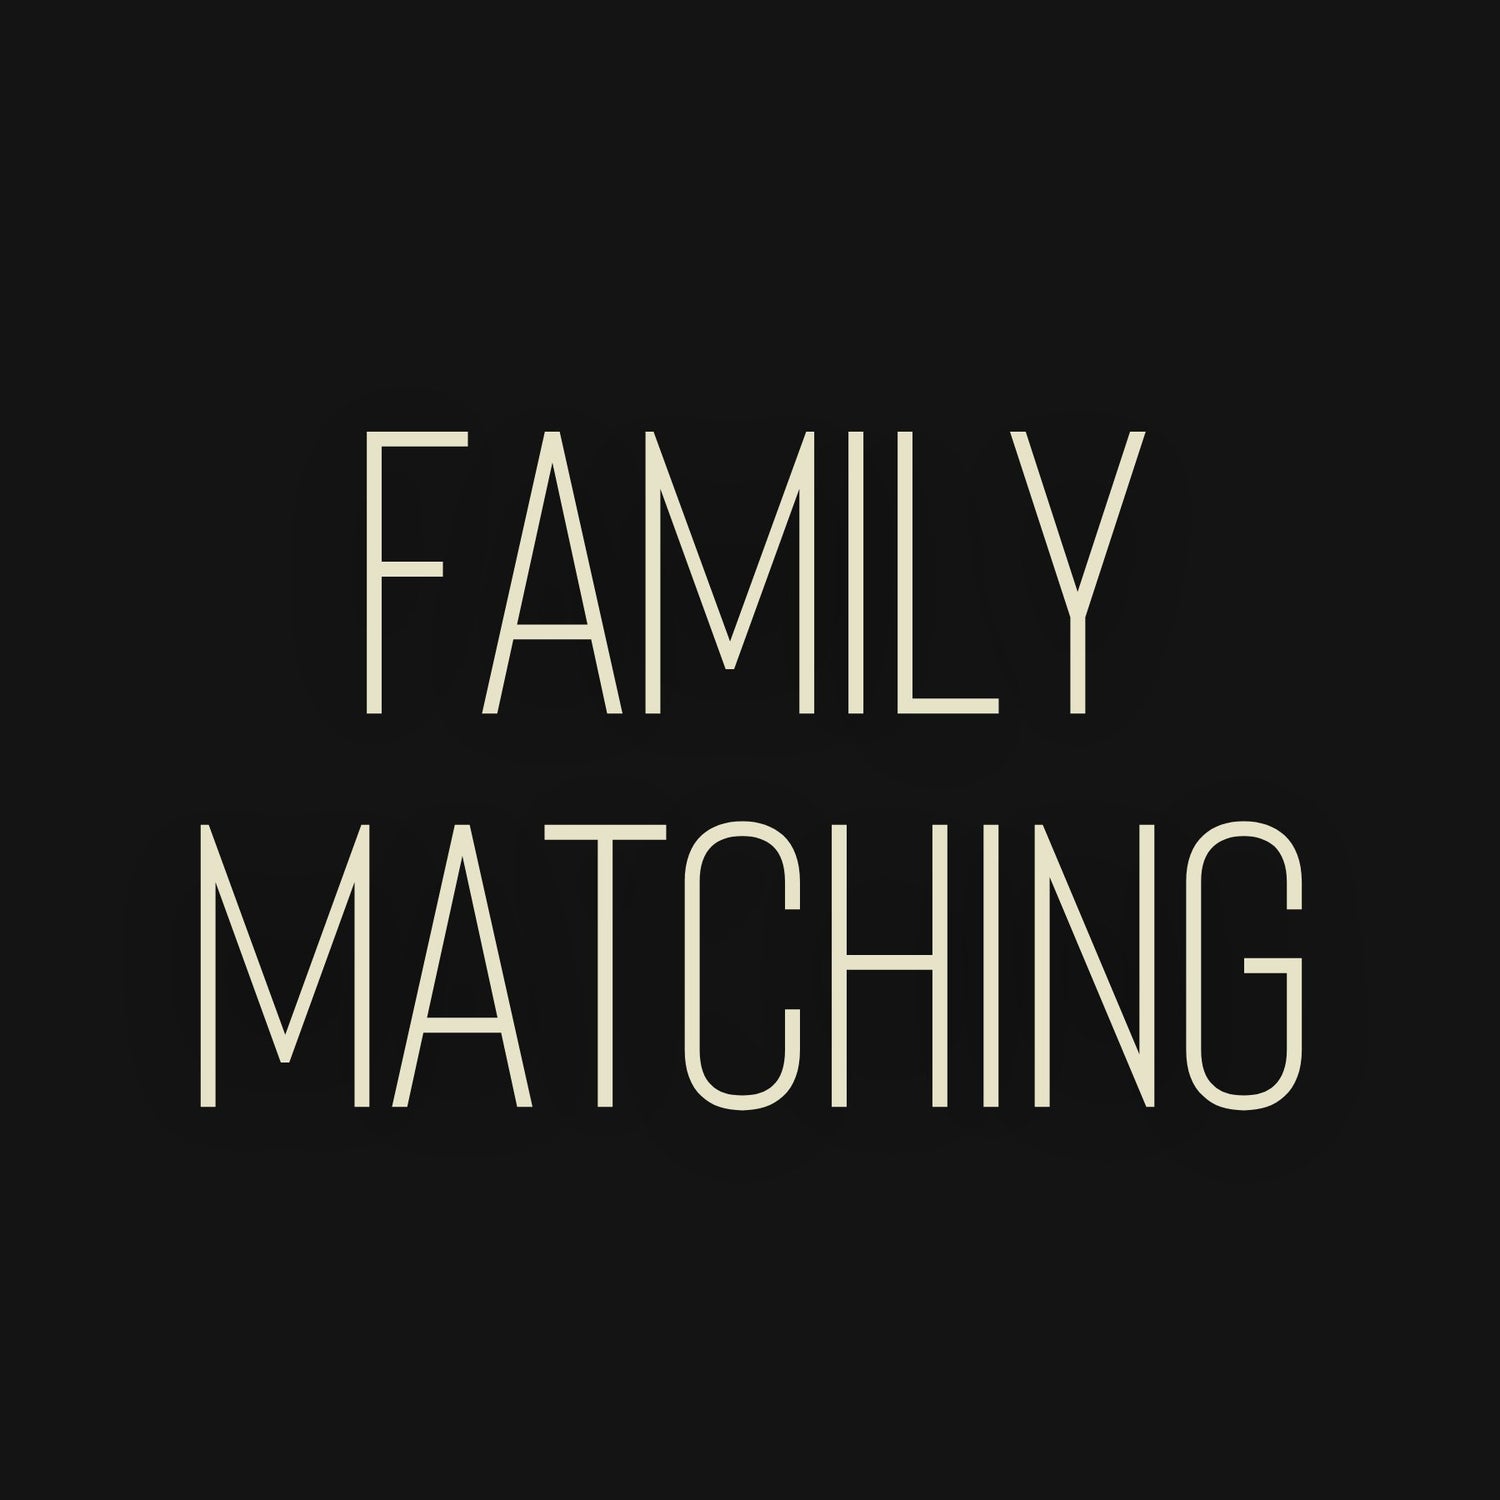 FAMILY MATCHING